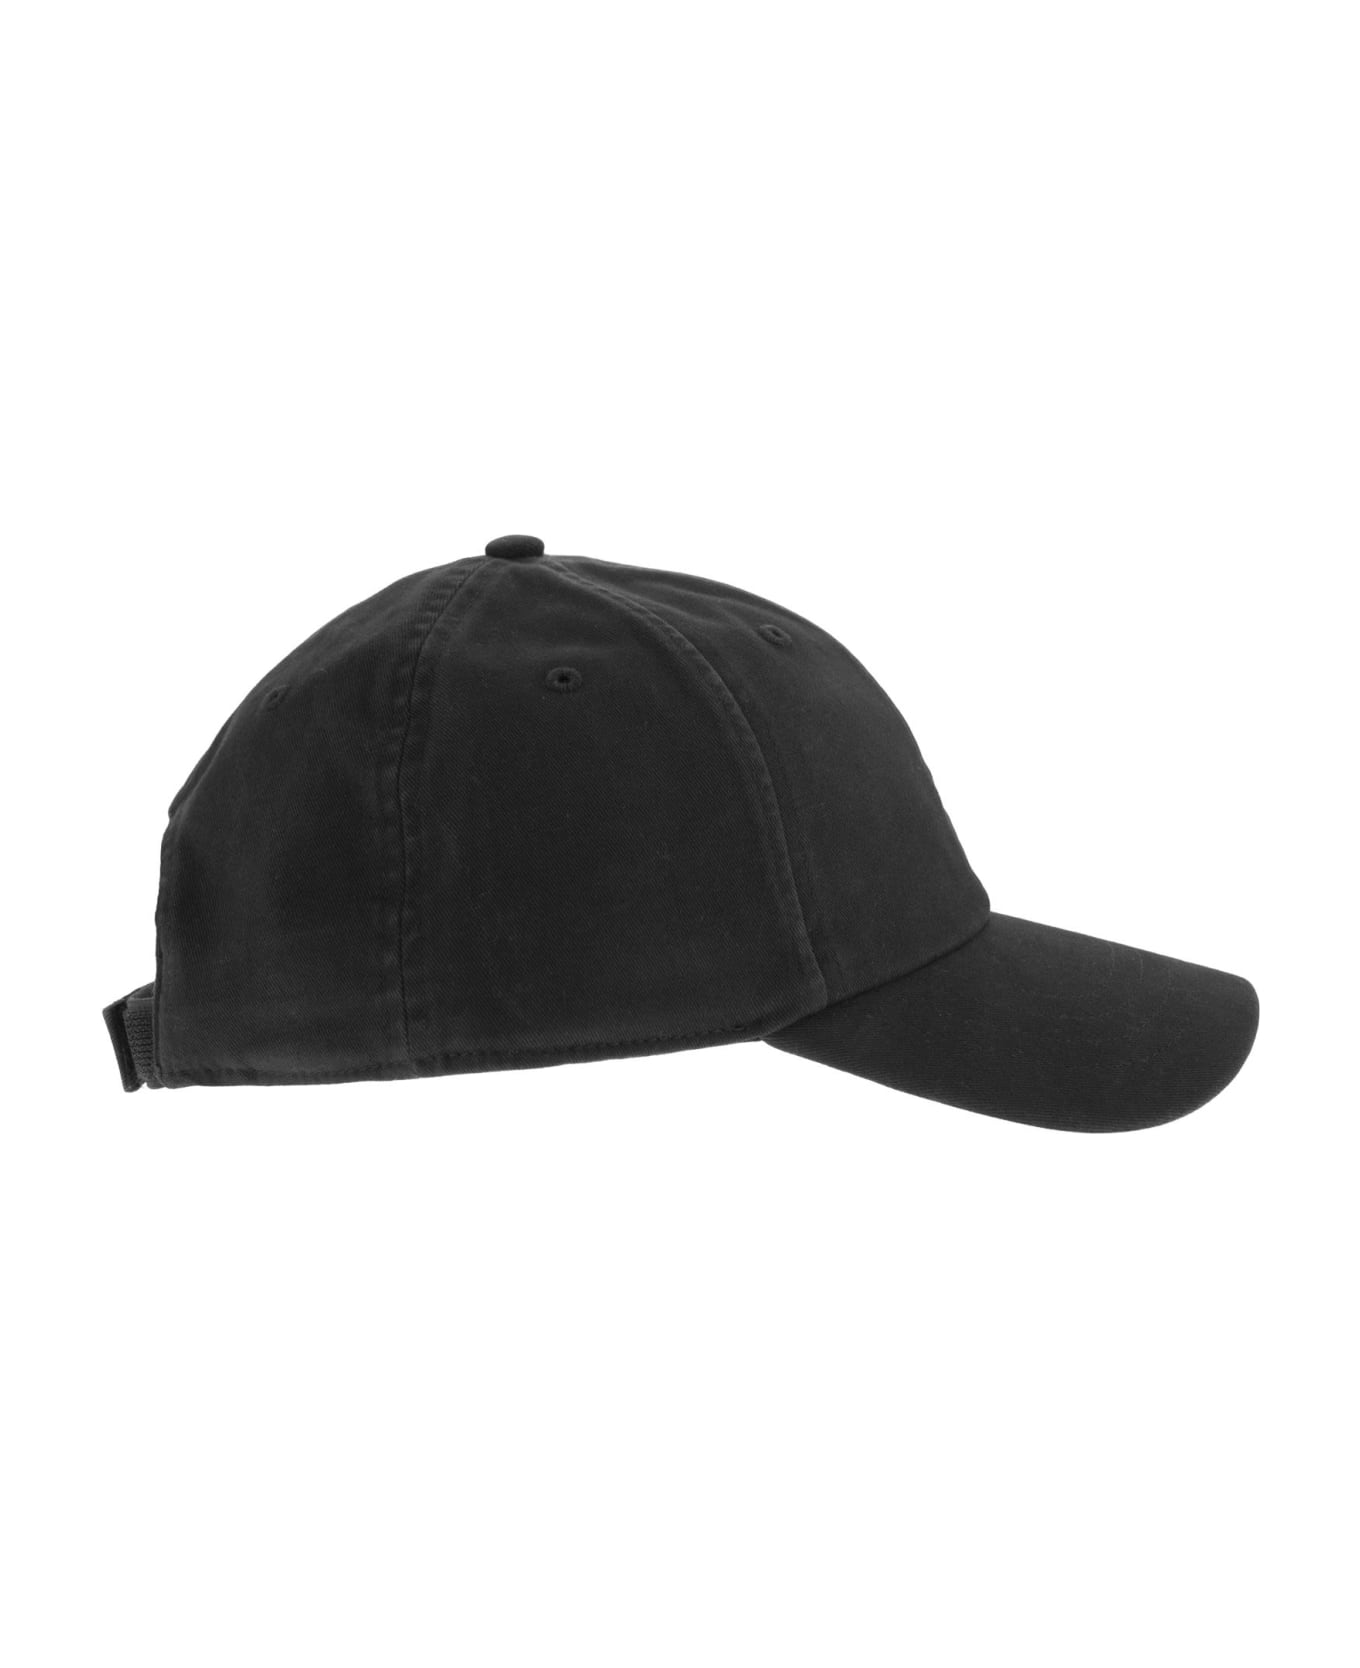 Canada Goose Hat With Visor - Black 帽子